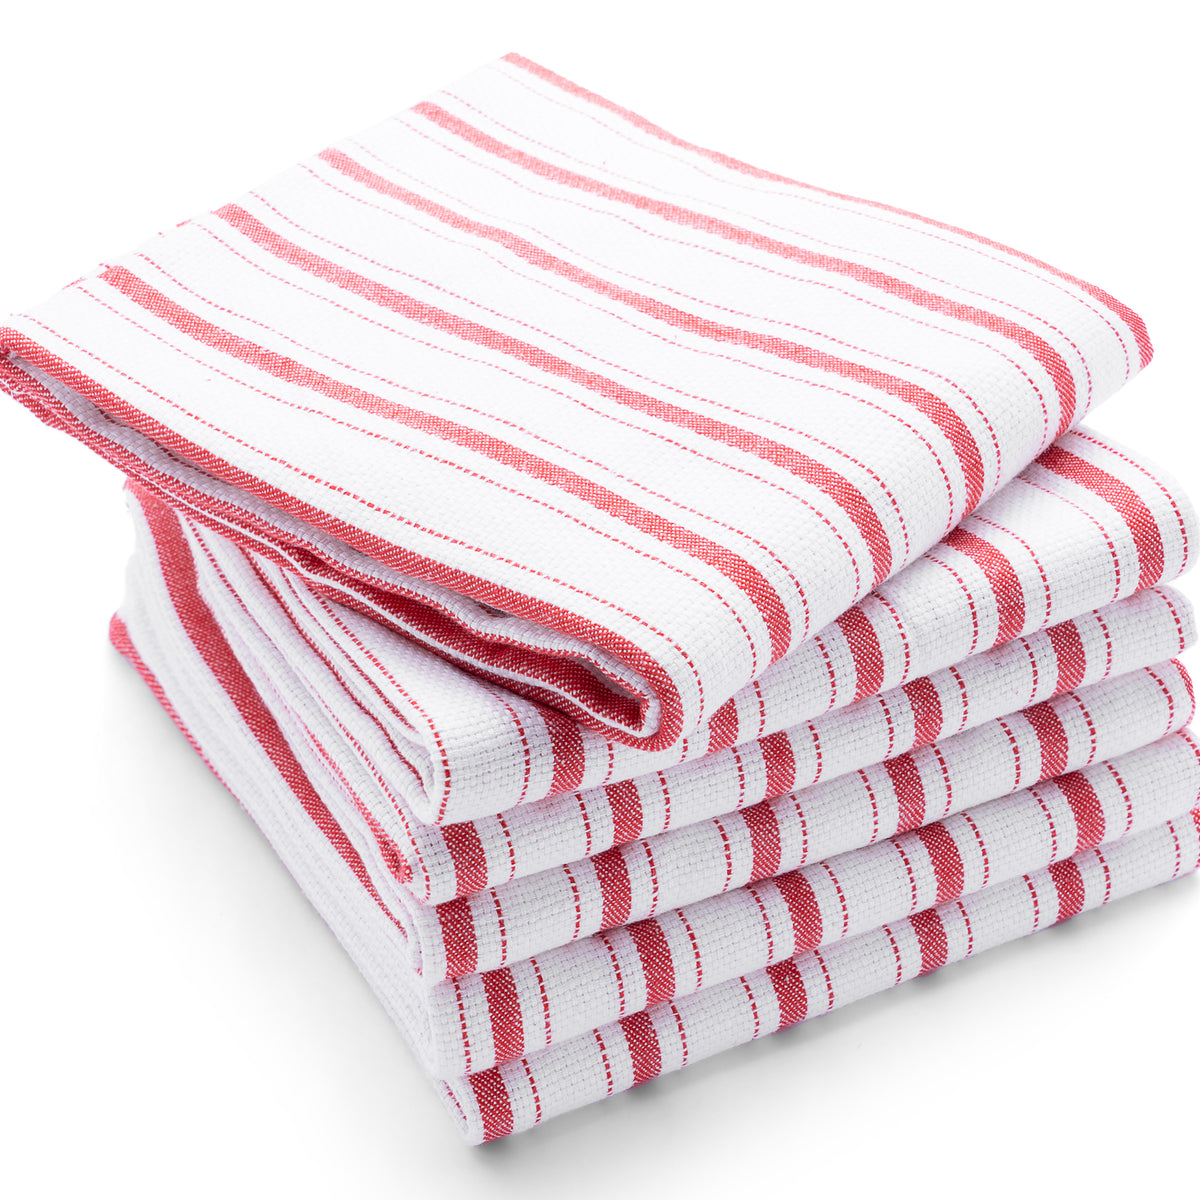 Farmhouse Woven Cotton Kitchen Towels - Set of 5